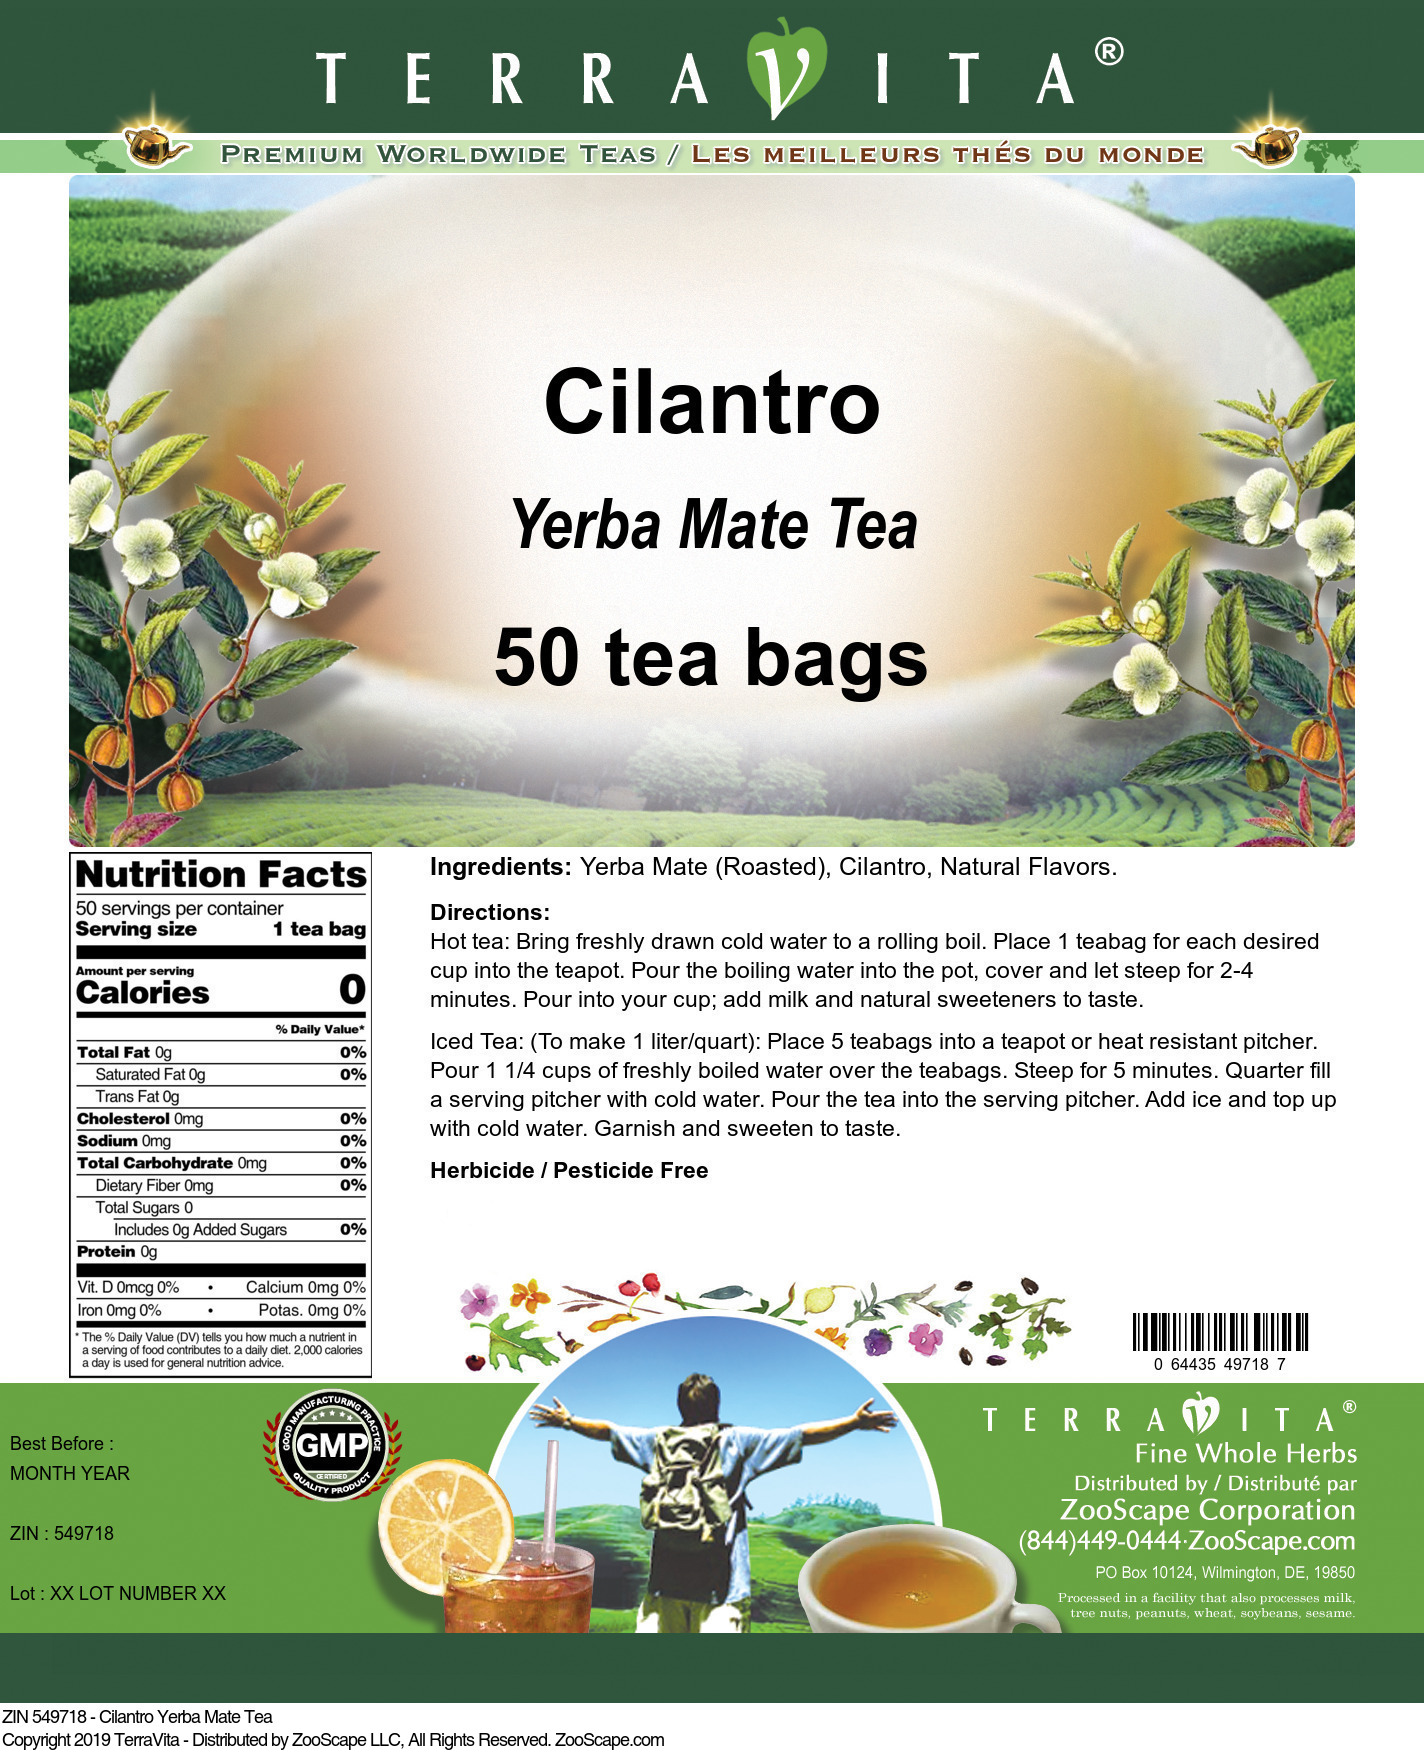 Cilantro Yerba Mate Tea - Label